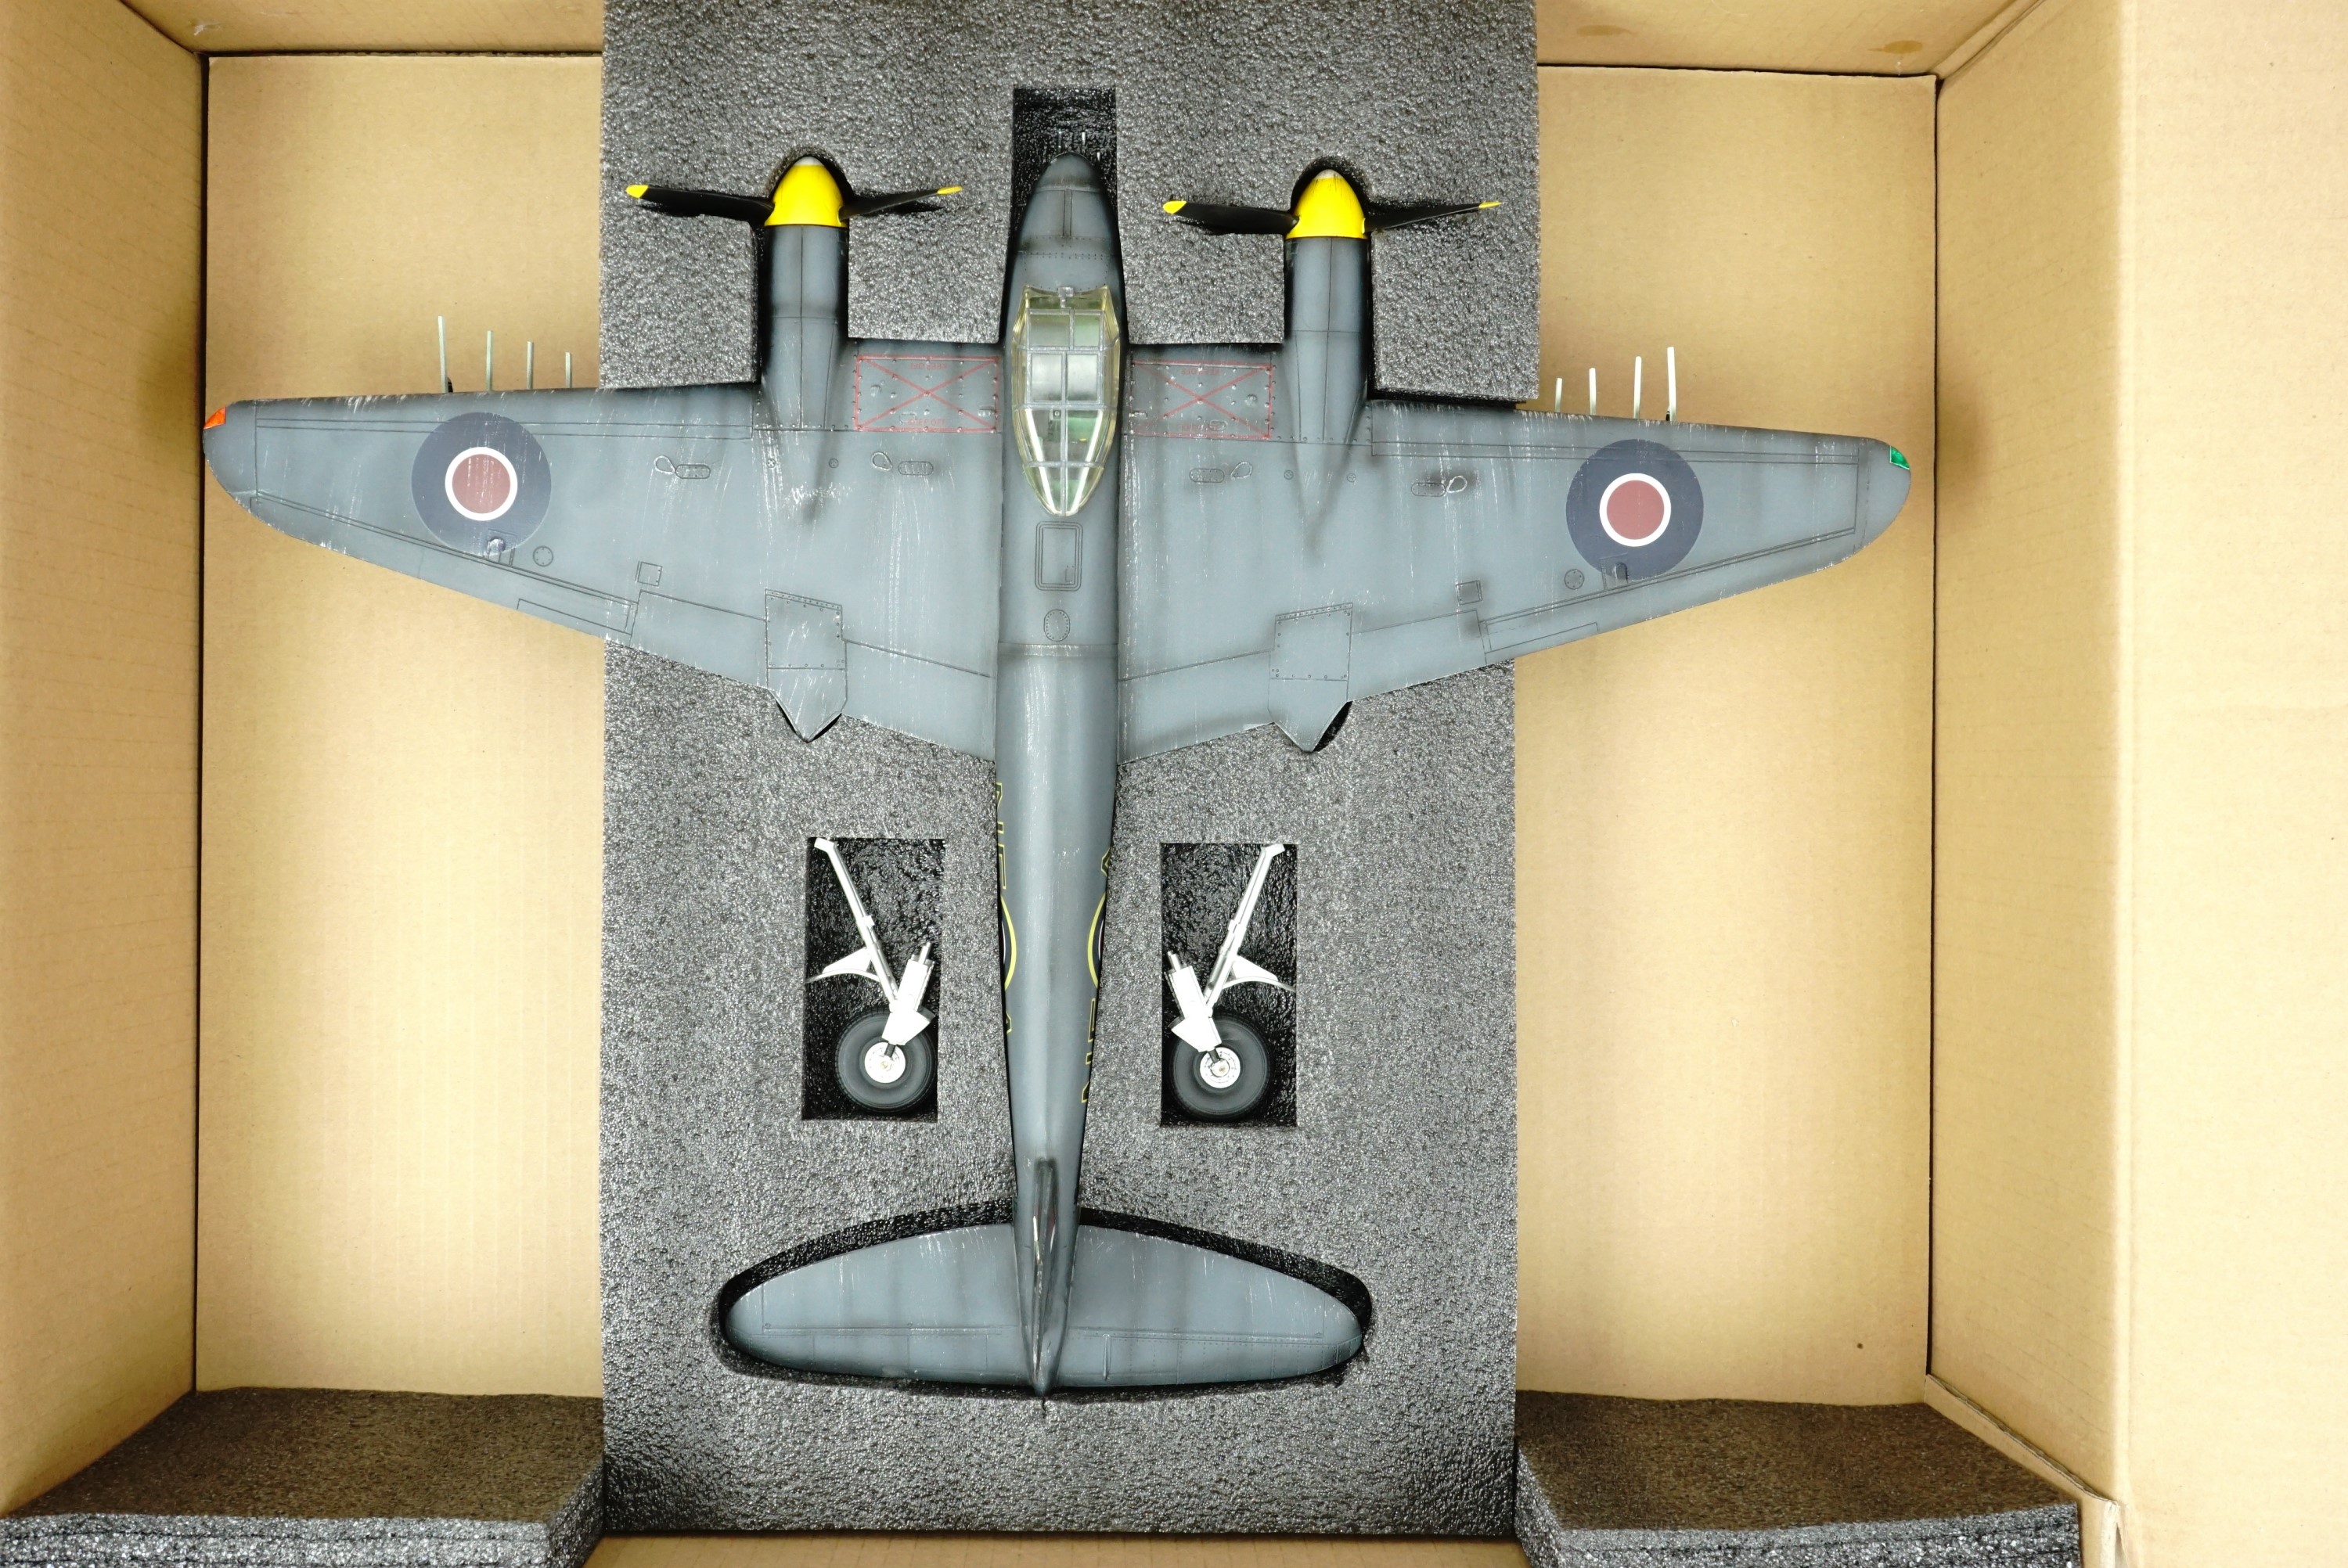 A Figarti scale model RAF Mosquito